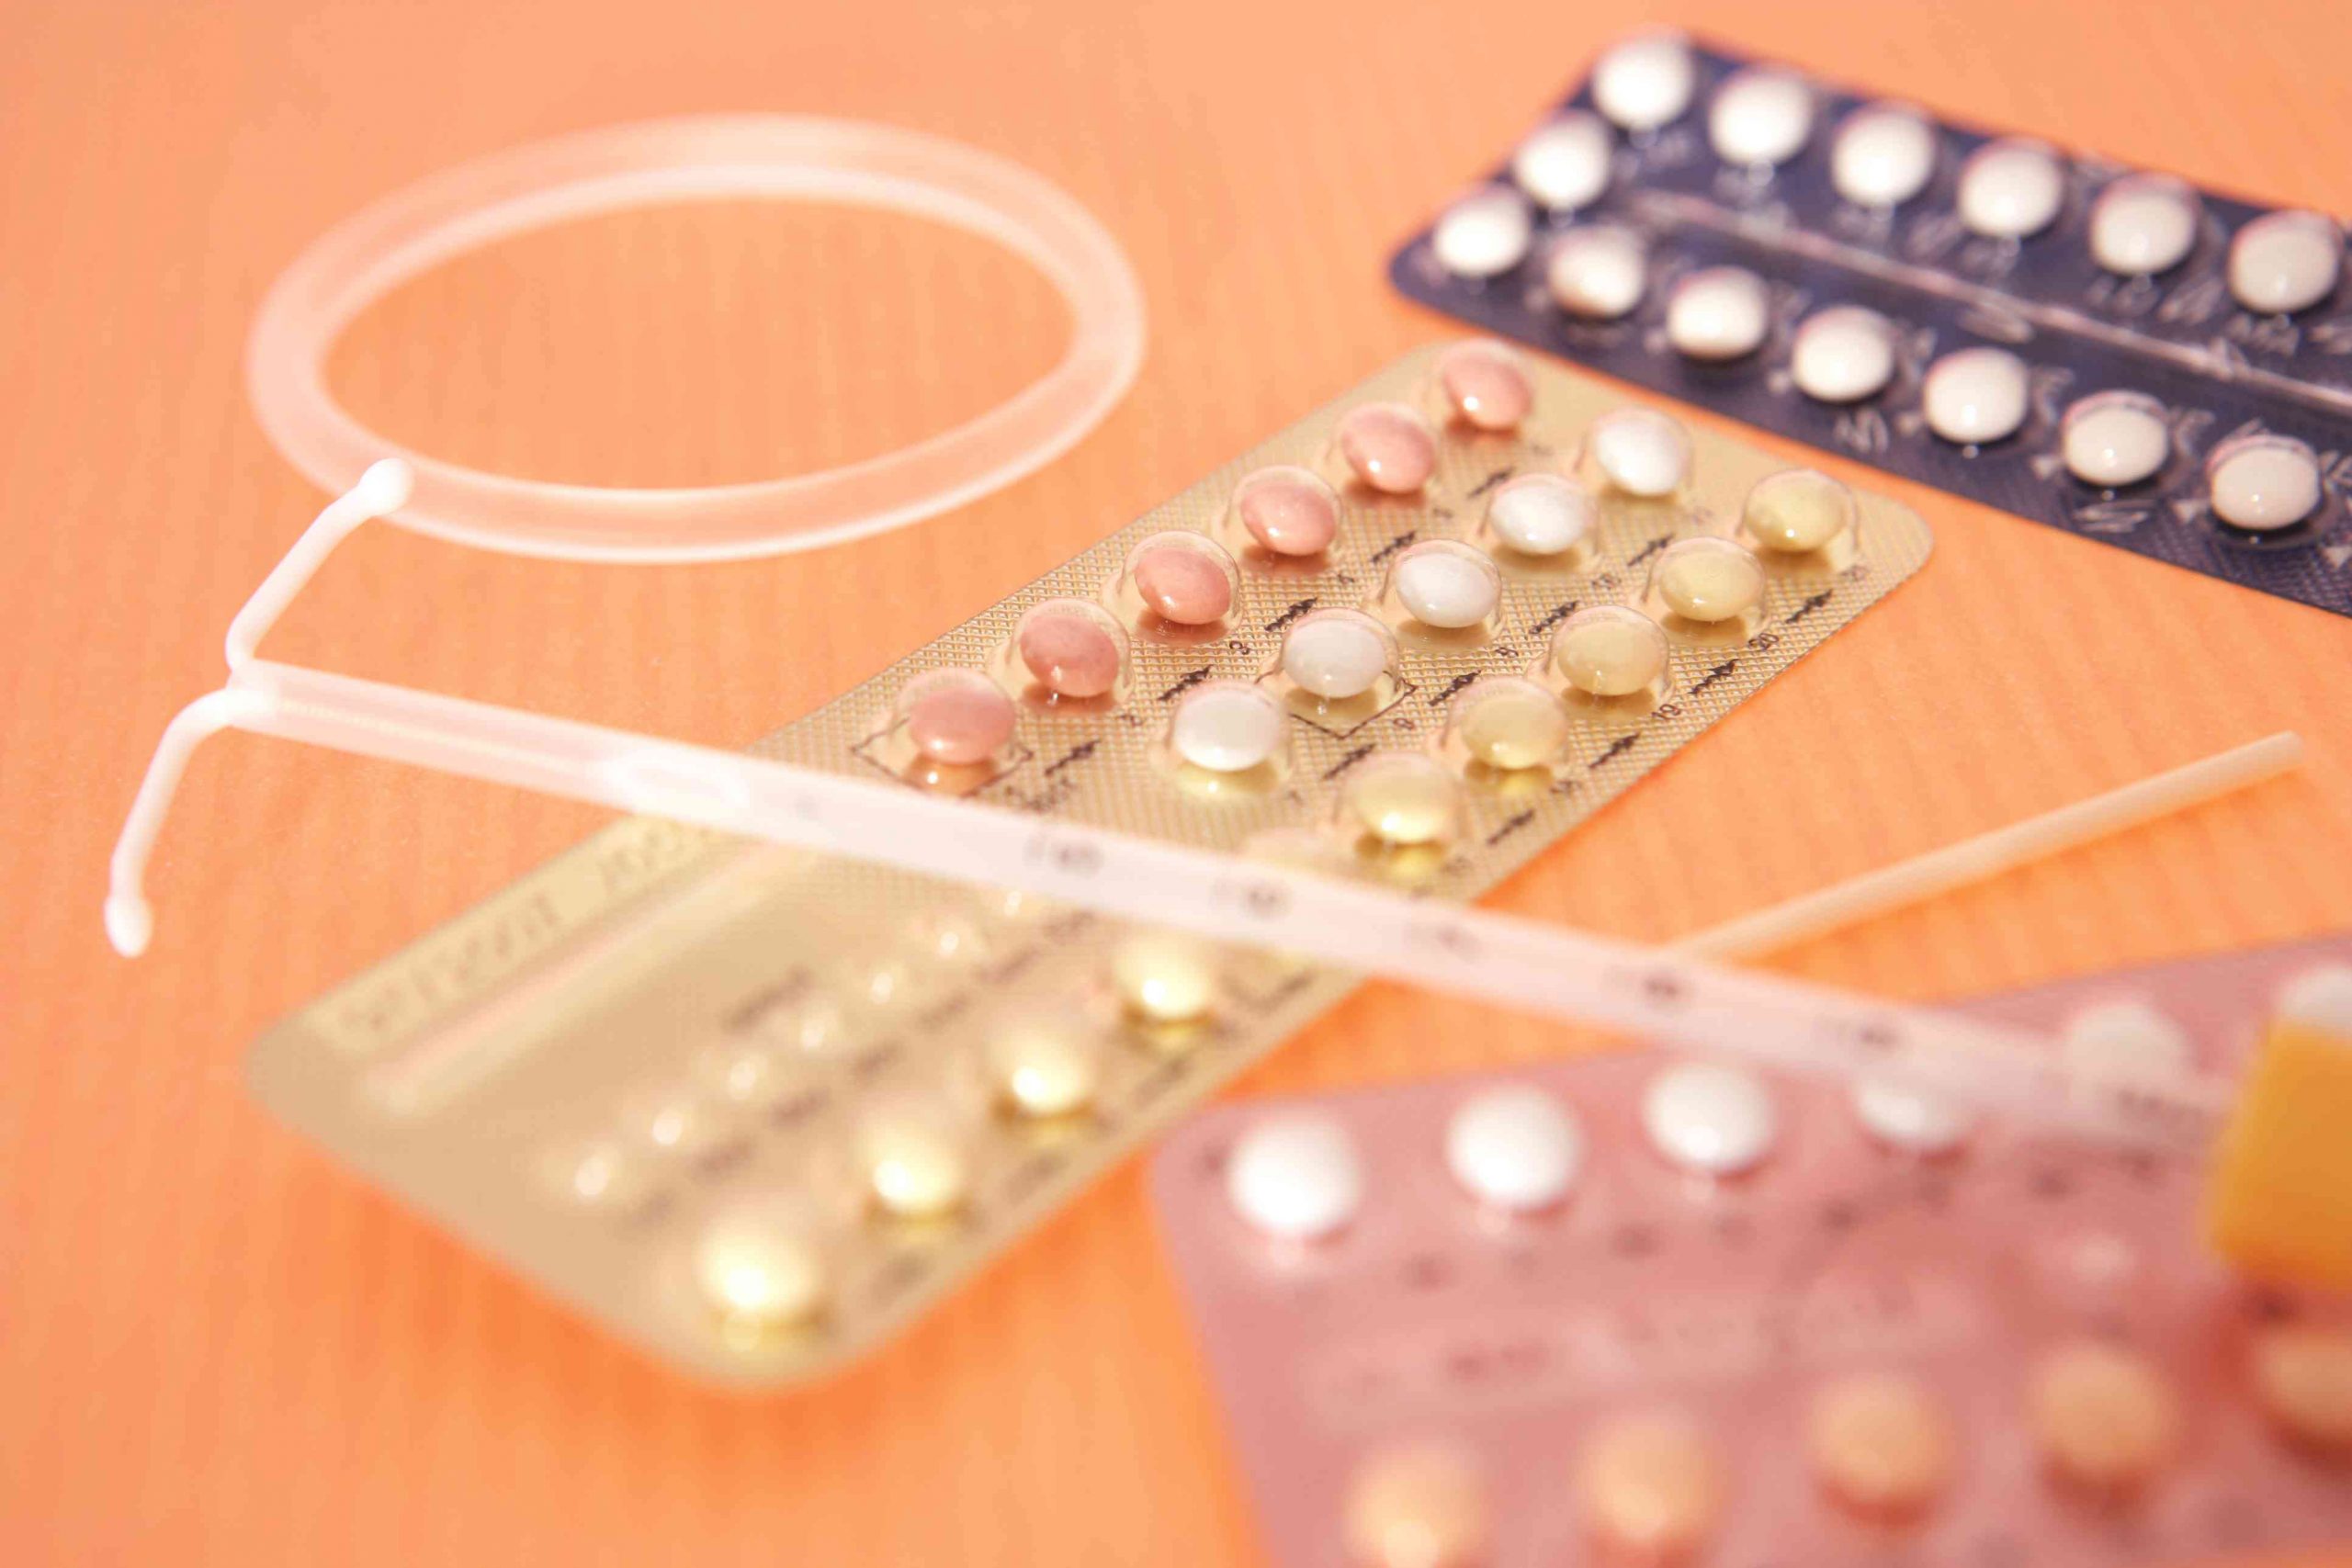 The contraceptive pill is convenient